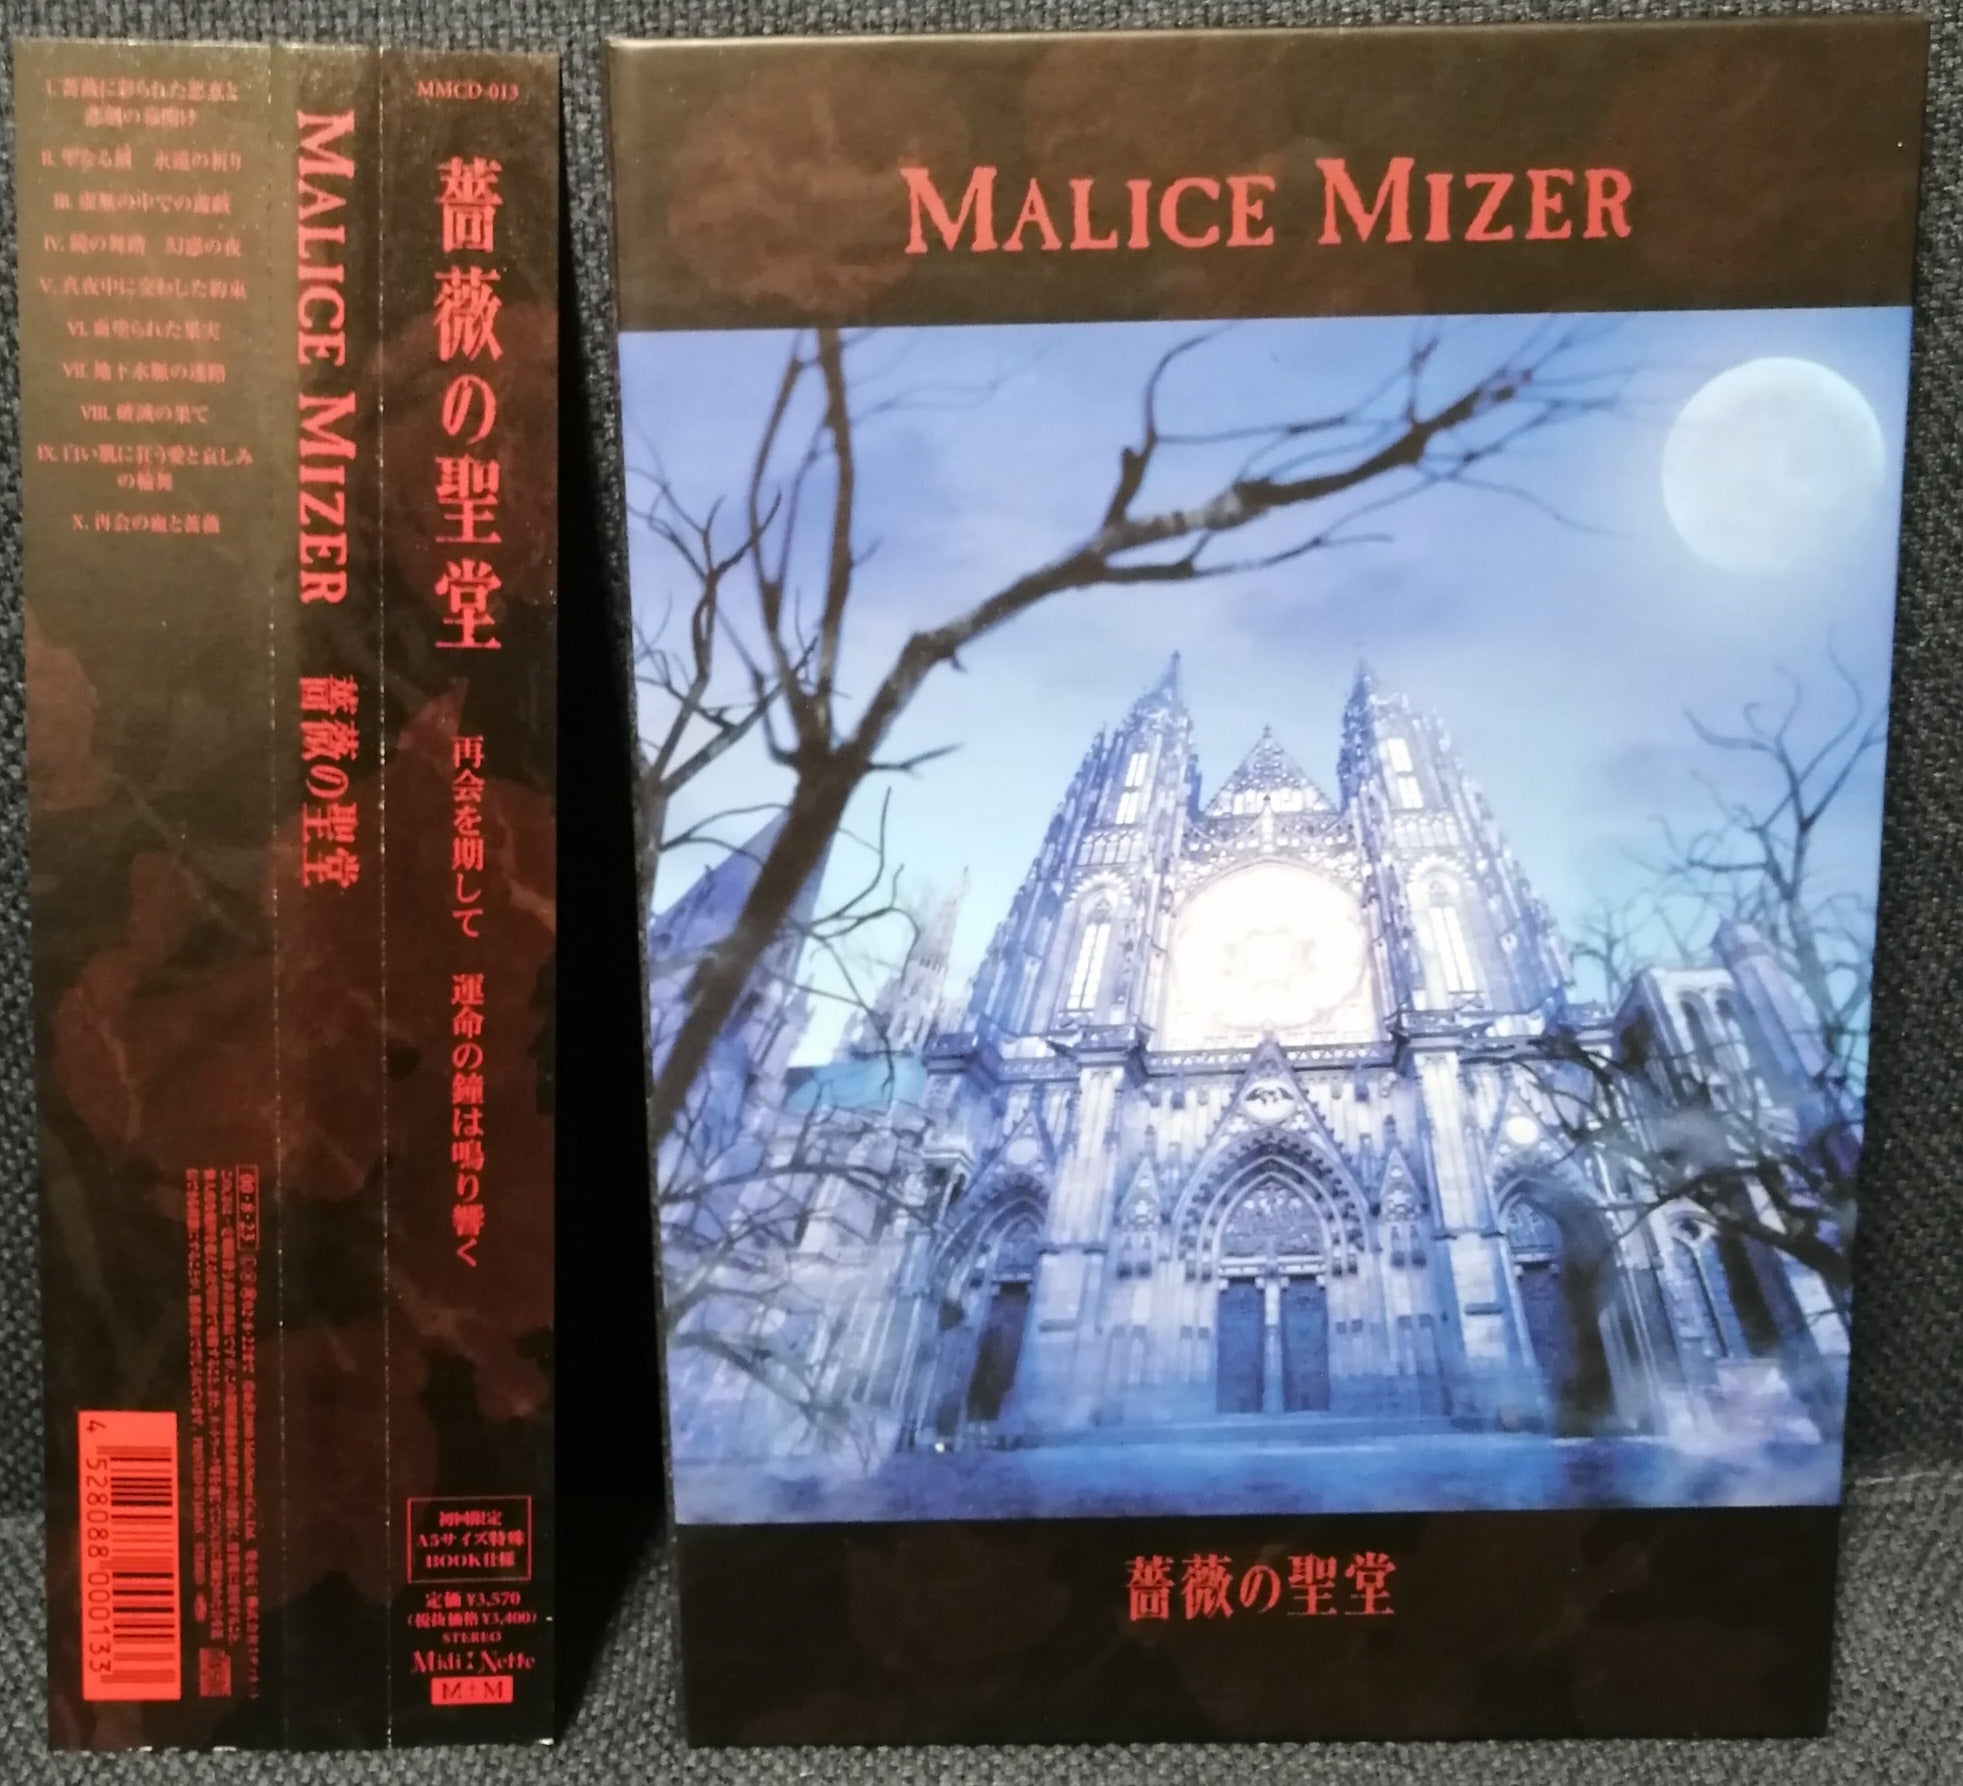  Oboro Muramasa The Demon Blade Genrokukaikitan Music Collection  CD Japan : Basiscape: CDs & Vinyl